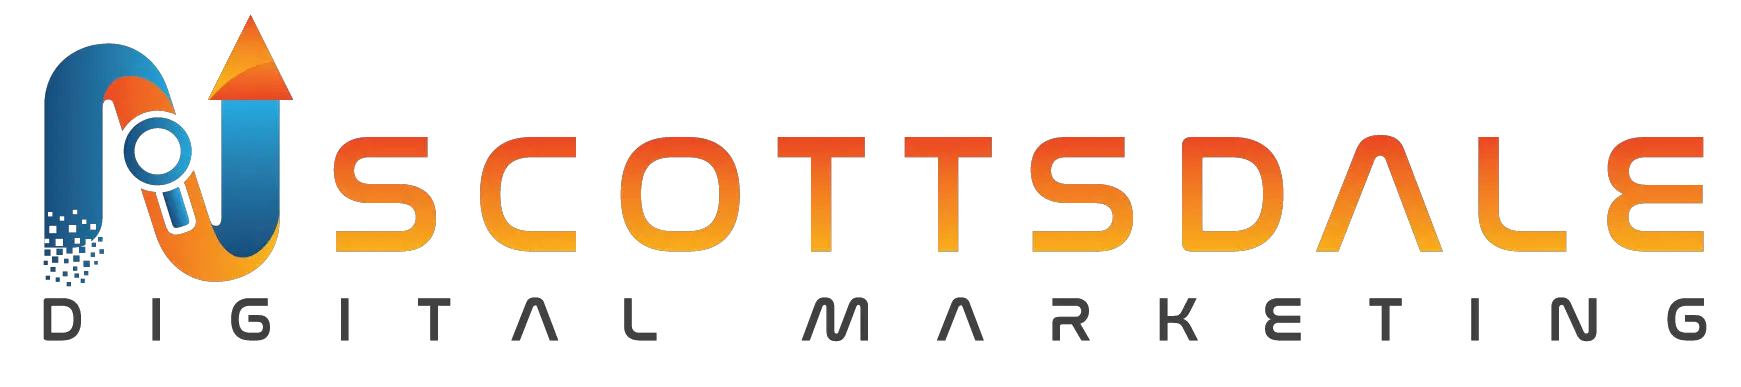 Business logo of North Scottsdale Digital Marketing LLC